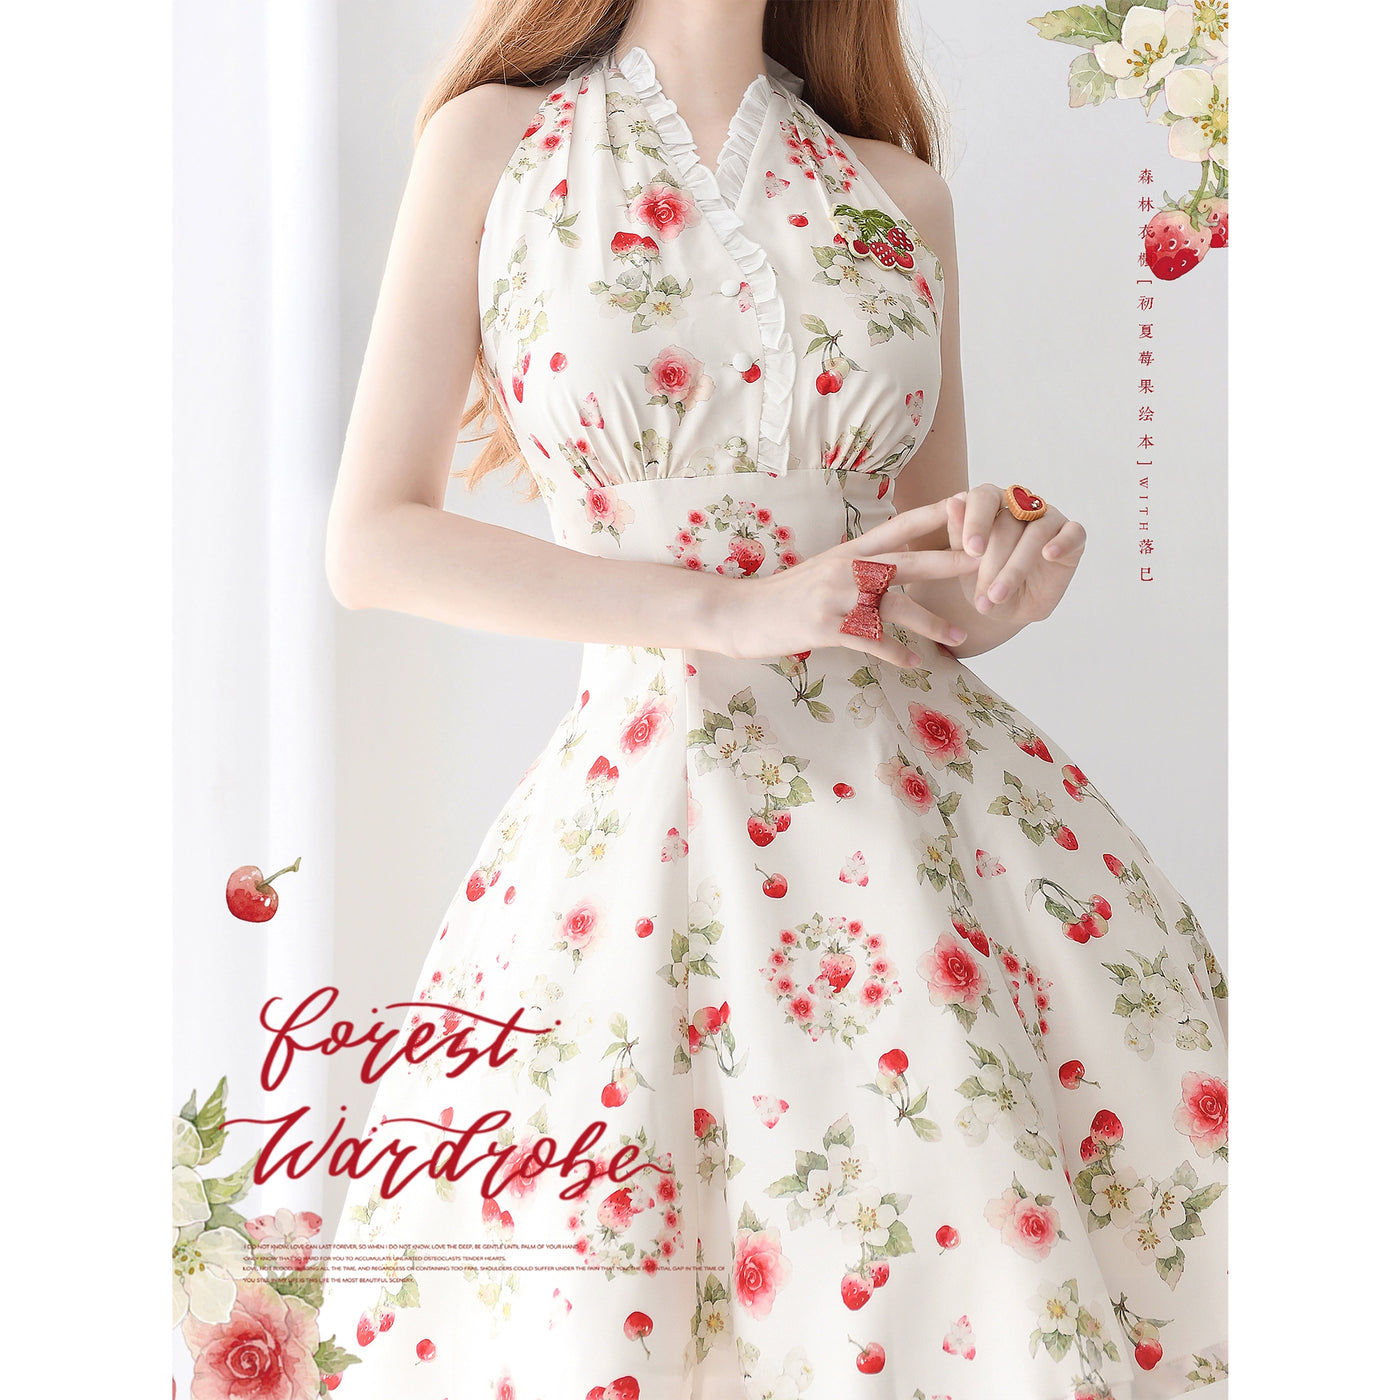 Forest Wardrobe~Summer Berry Picture Book~Elegant Classic Lolita Dress Halter Neckline Floral Print Dress   